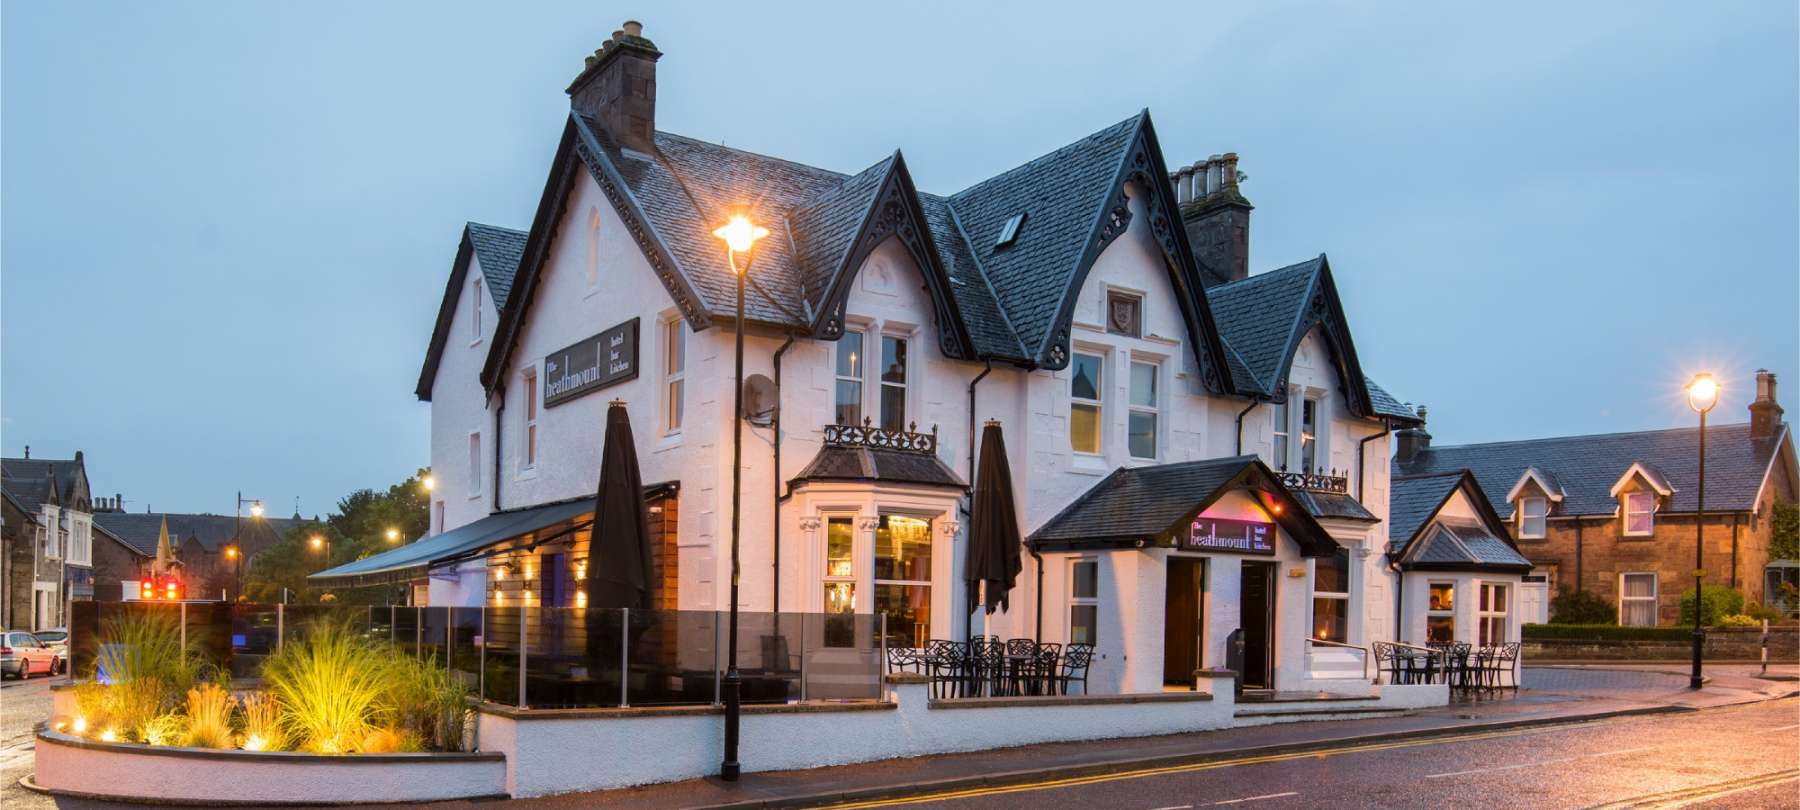 Heathmount Hotel and Restaurant Inverness